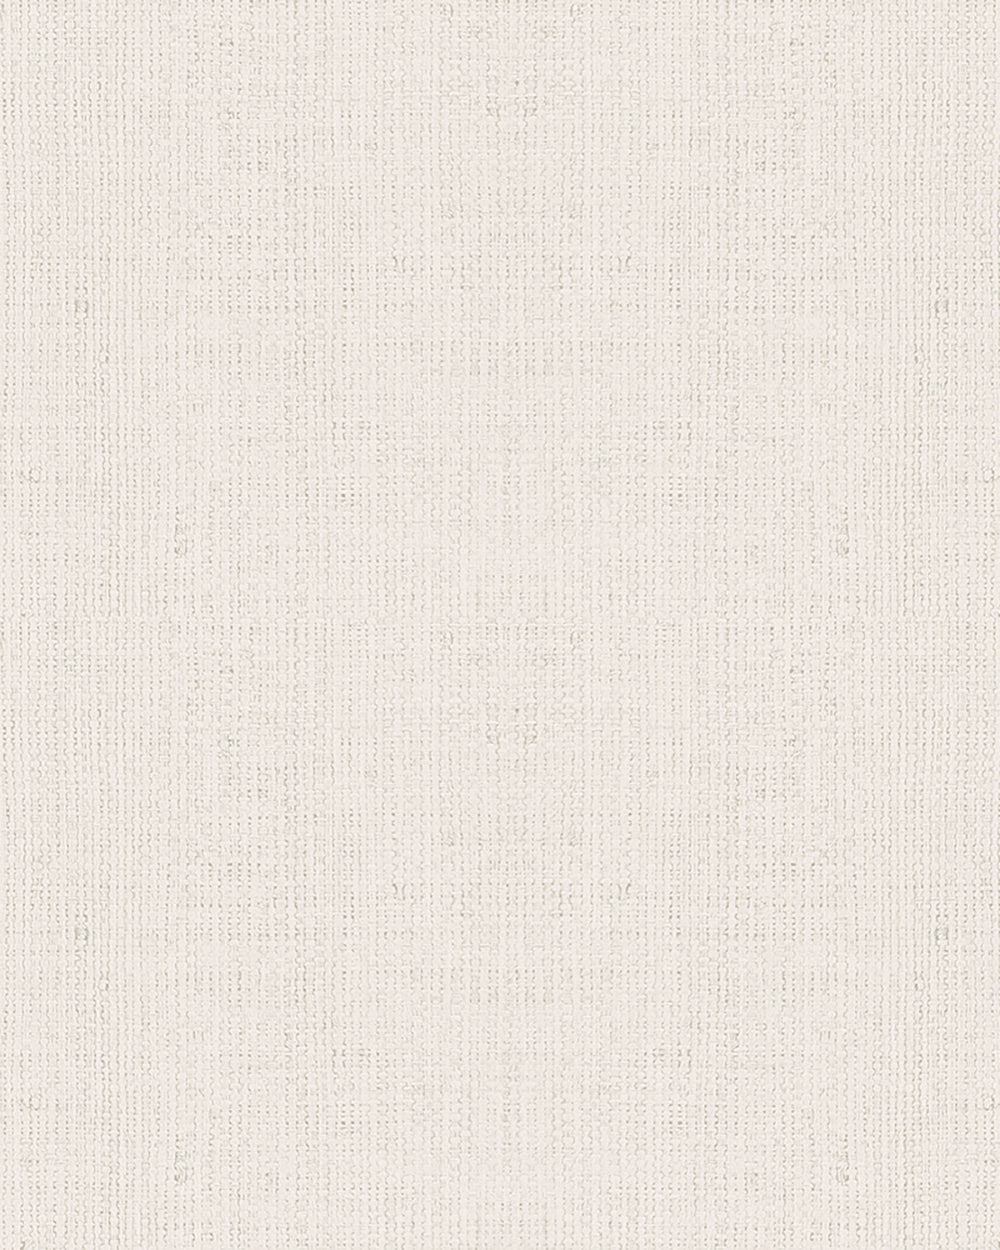 Casual - Textured Rattan Plains plain wallpaper Marburg Roll Light Grey  30458